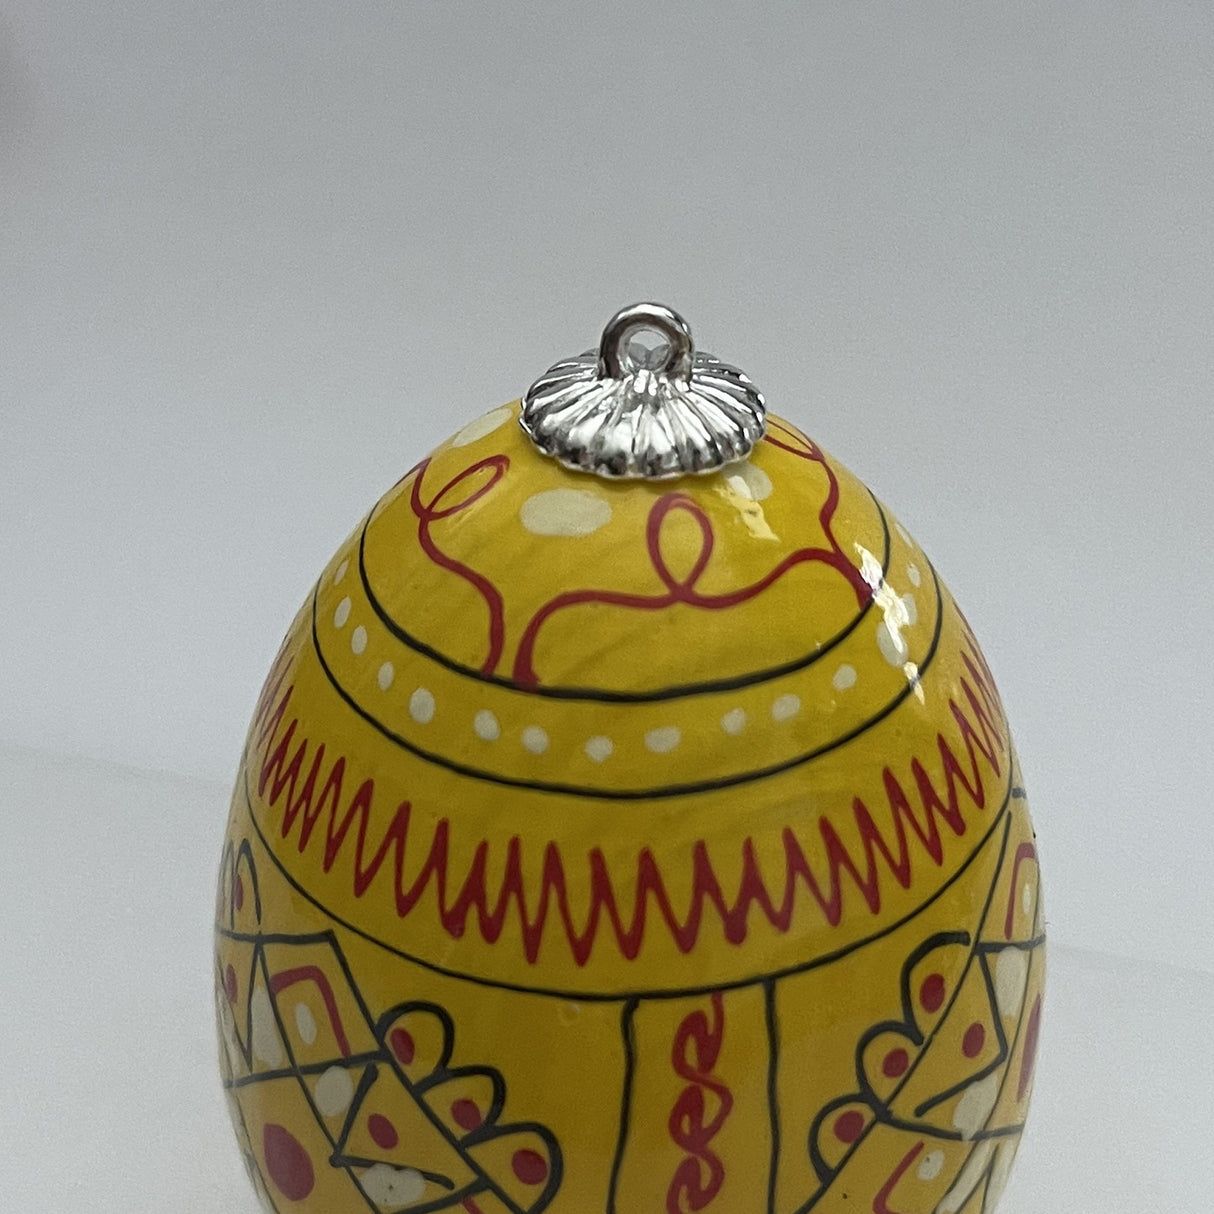 12 Silver Egg Top Adornments: Metal Ornament End Caps 0.47 Inches